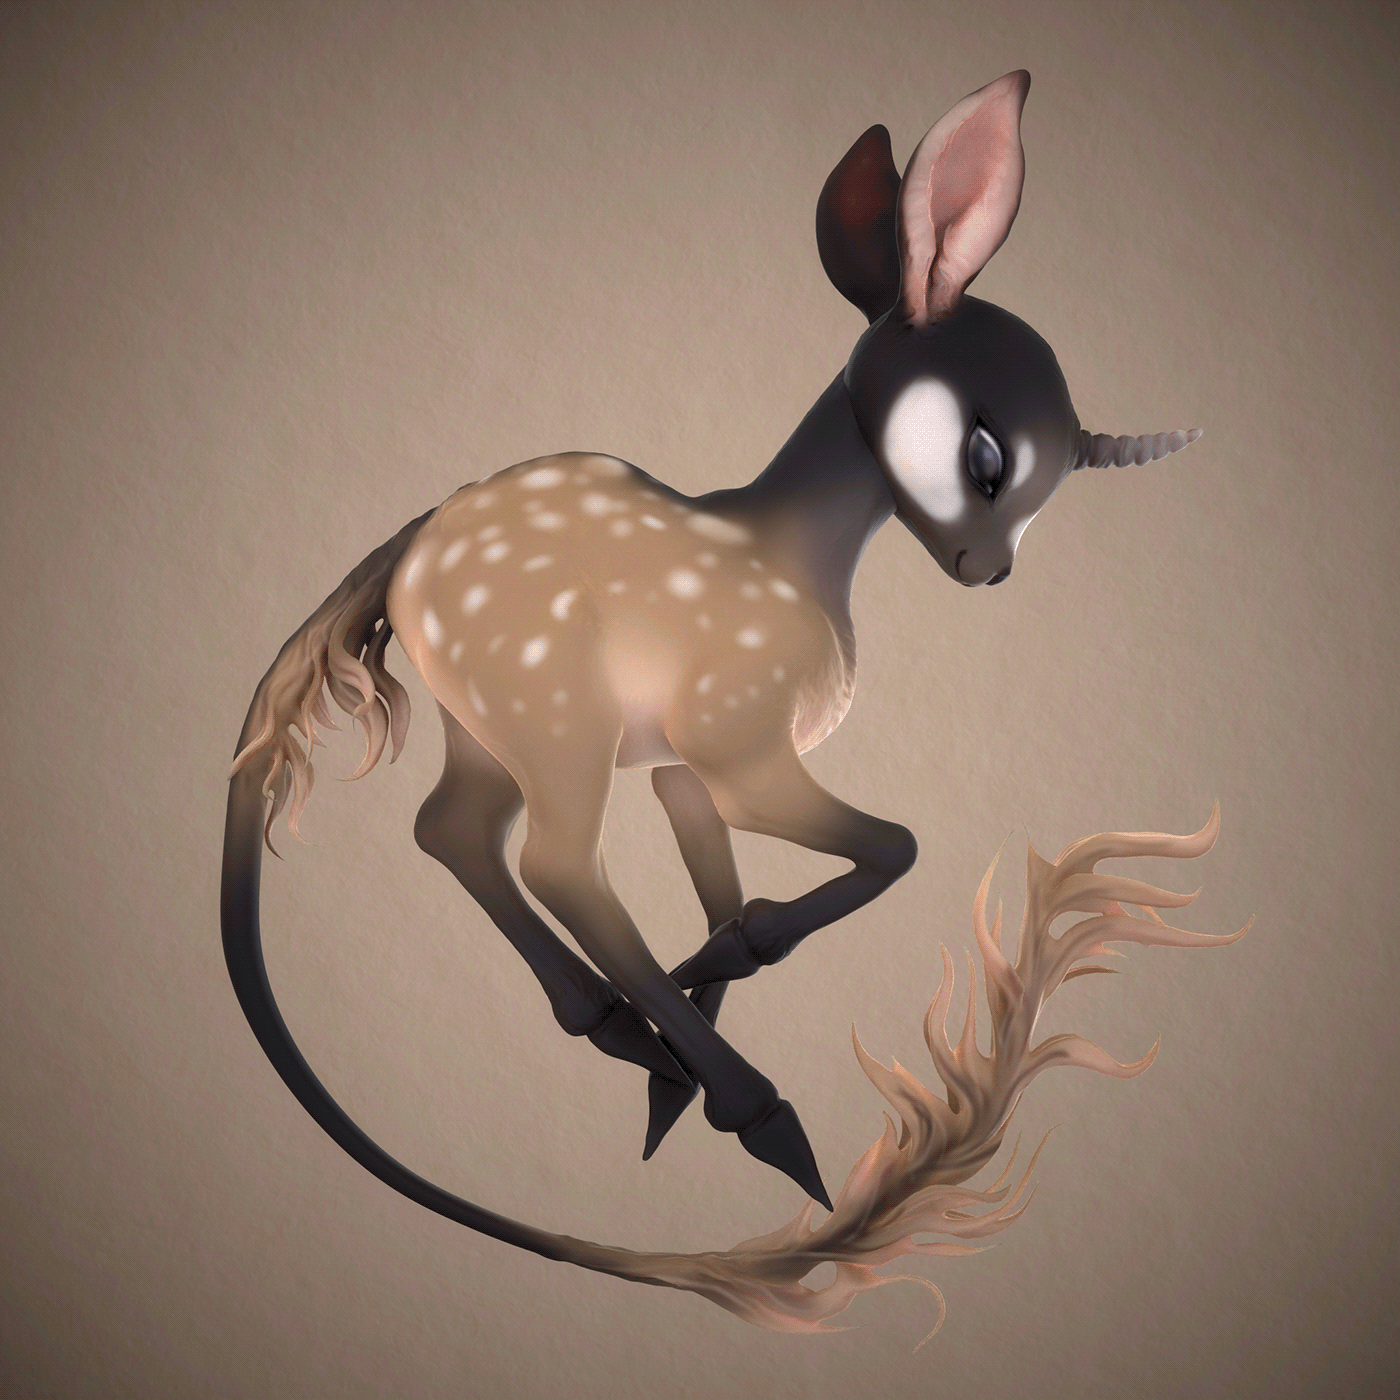 Baby Deer deer 3D sculpture Zbrush fantasy creature animal cute cartoon